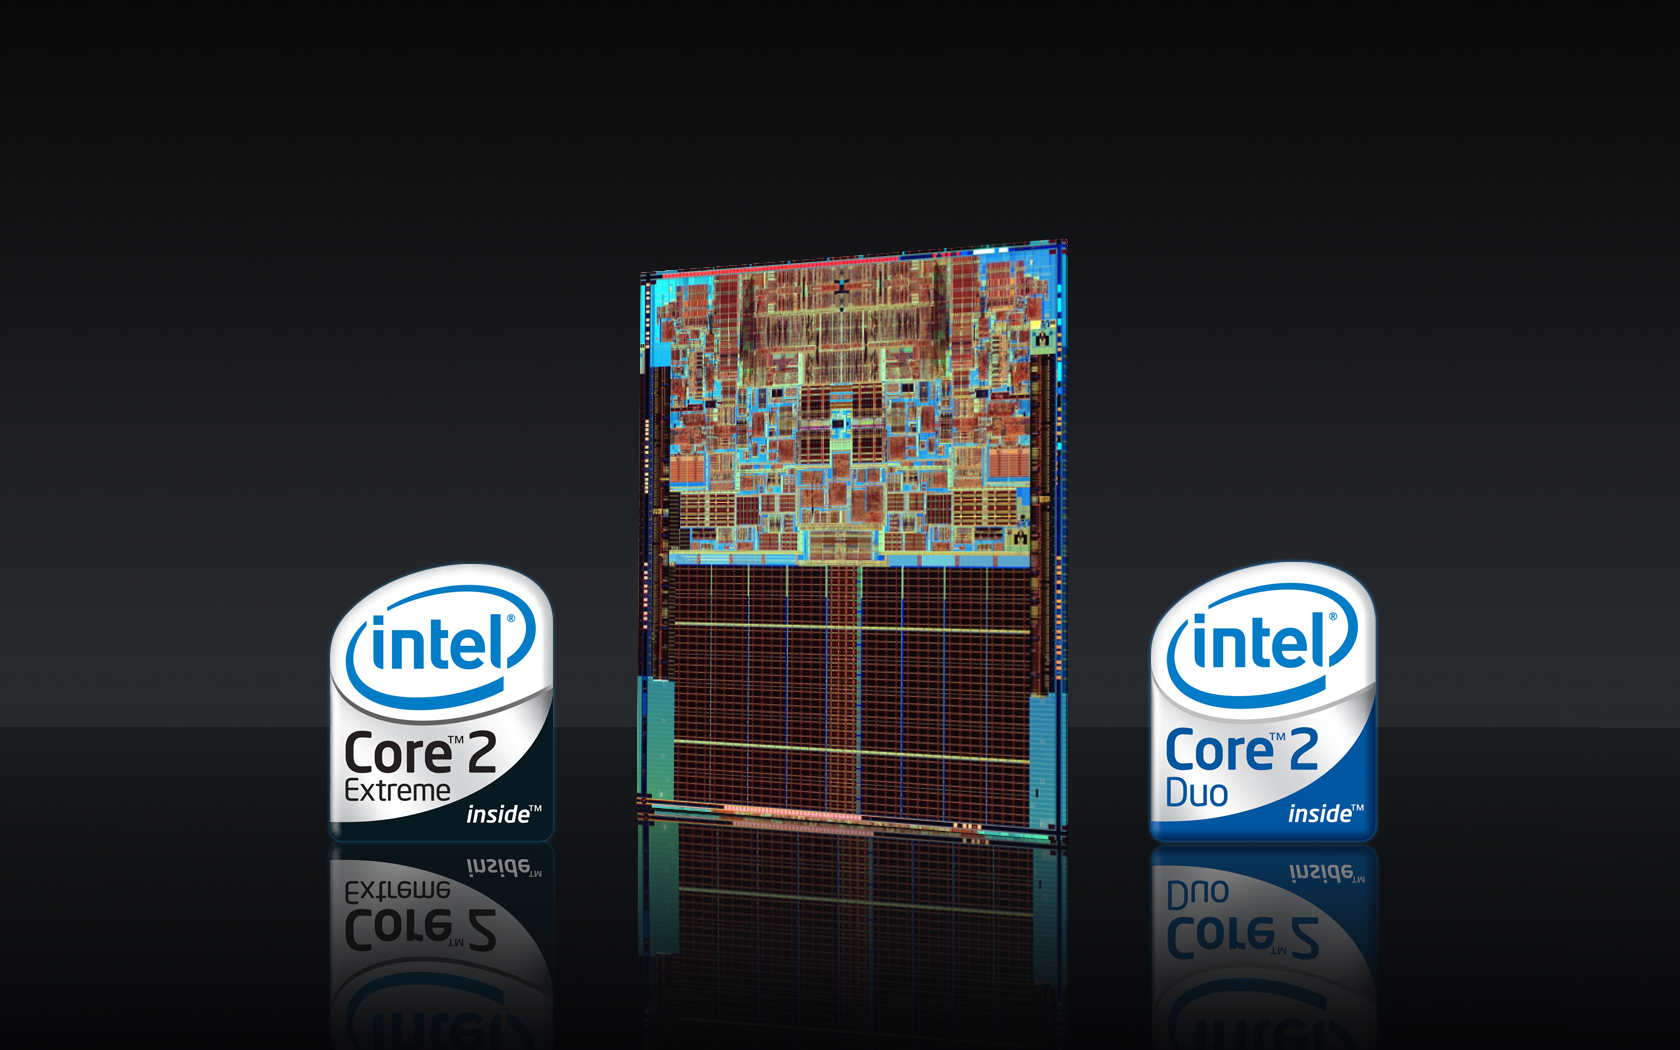 Интел 2 дуо. Intel Core 2x Duo. Intel Core 2 Duo inside. Ячейка Intel Core 2 Duo.